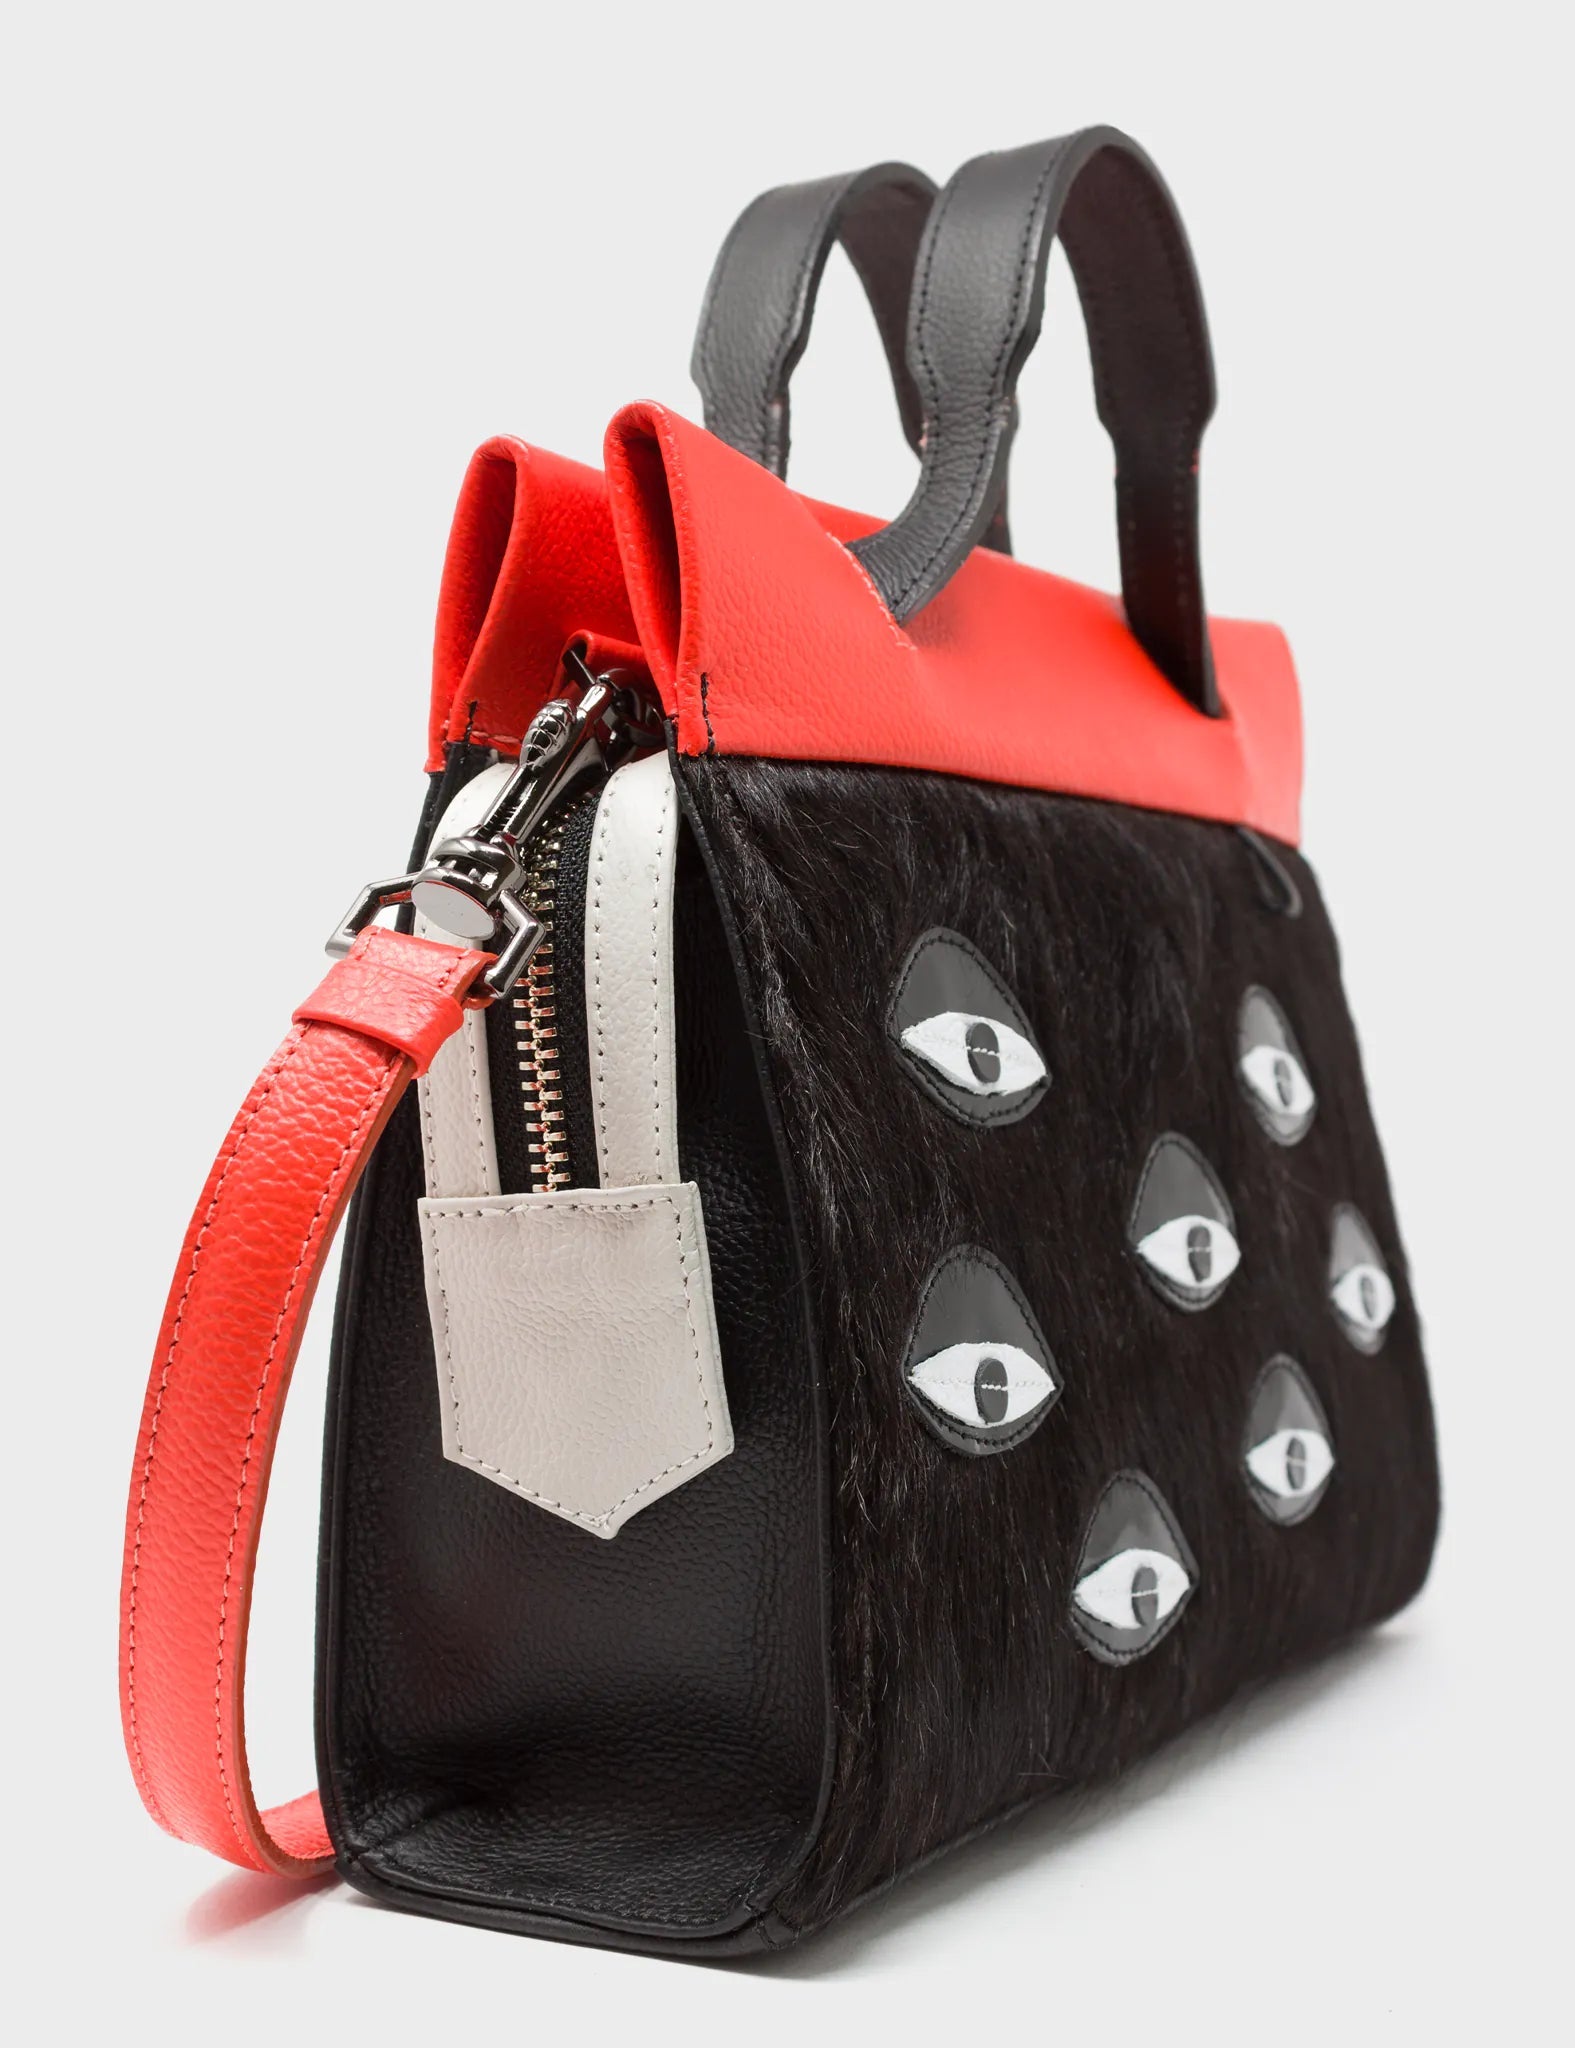 Vali Crossbody Small Black Leather Bag - Eyes Applique Adjustable Handle - Side view